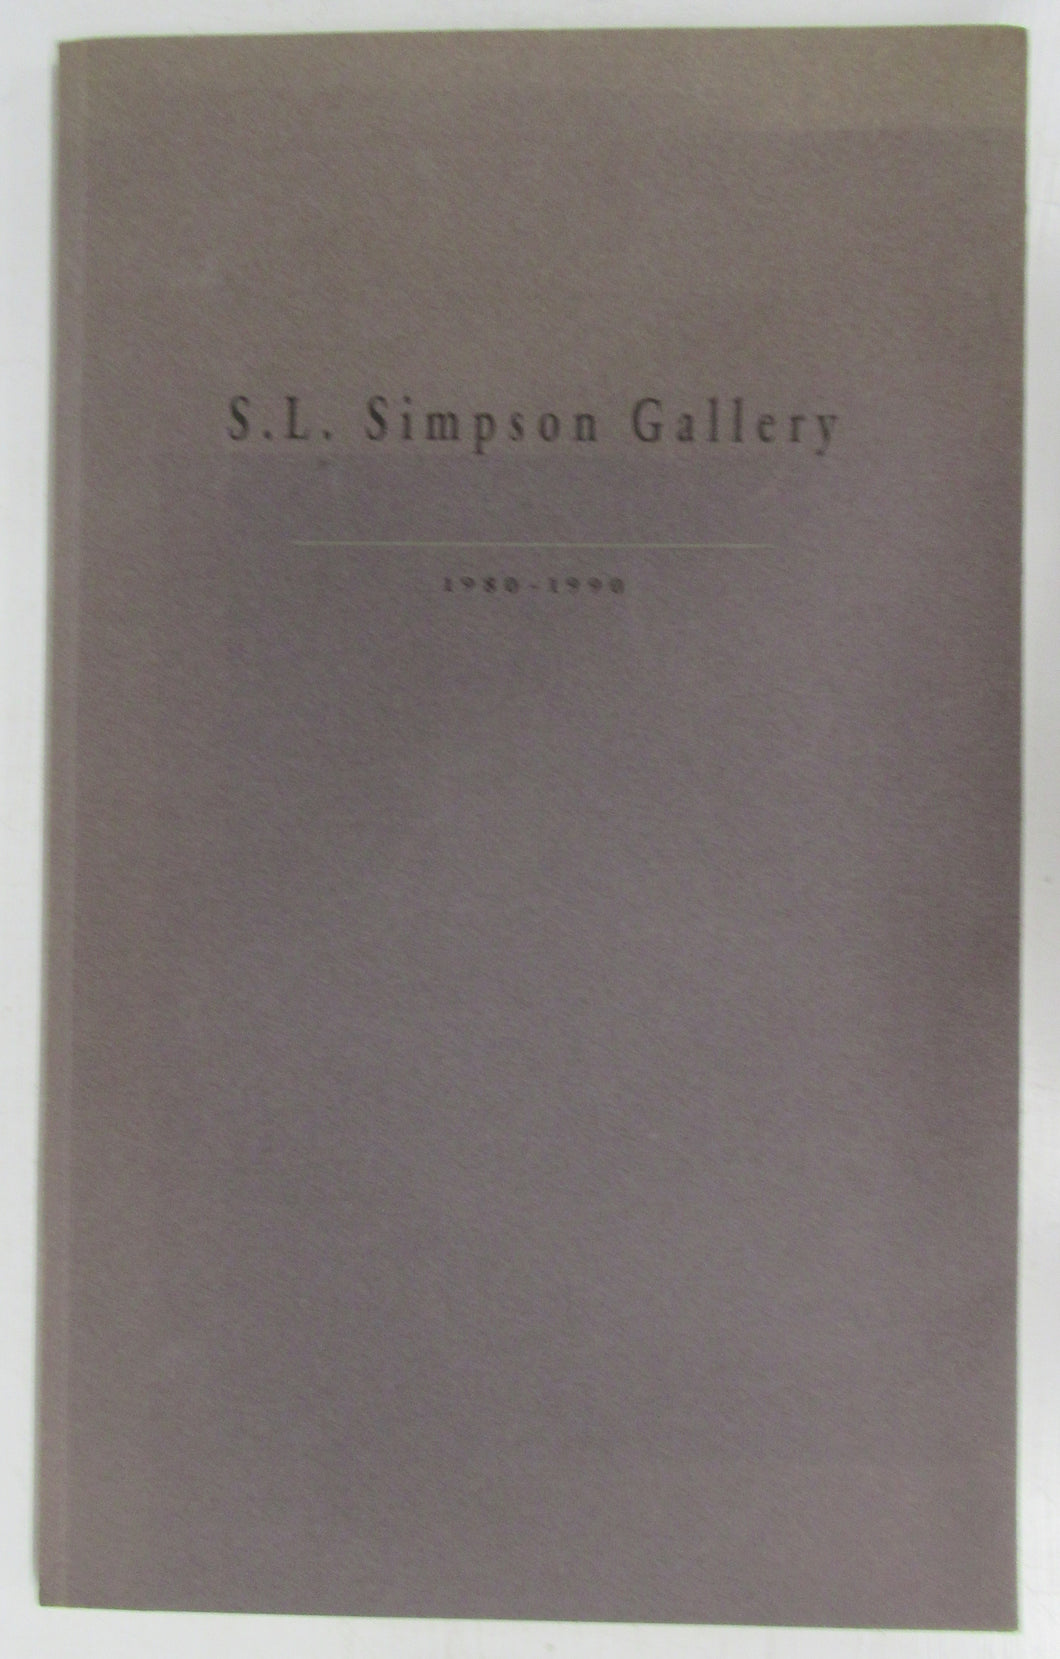 S. L. Simpson Gallery 1980-1990